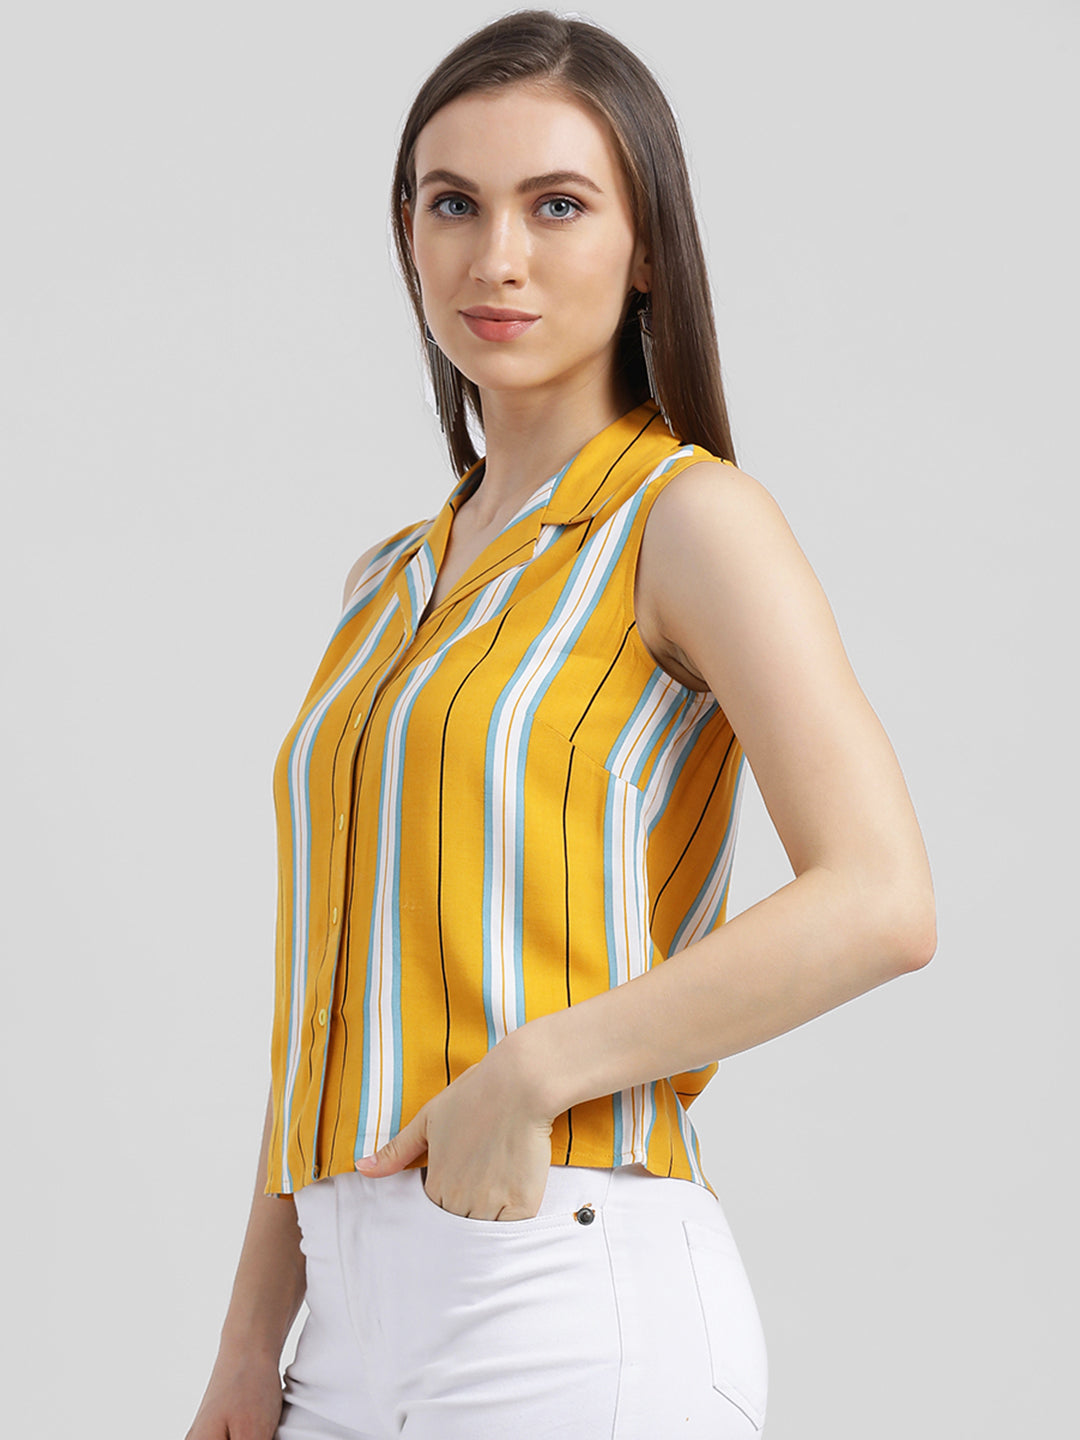 Zink London Women's Yellow Striped Shirt